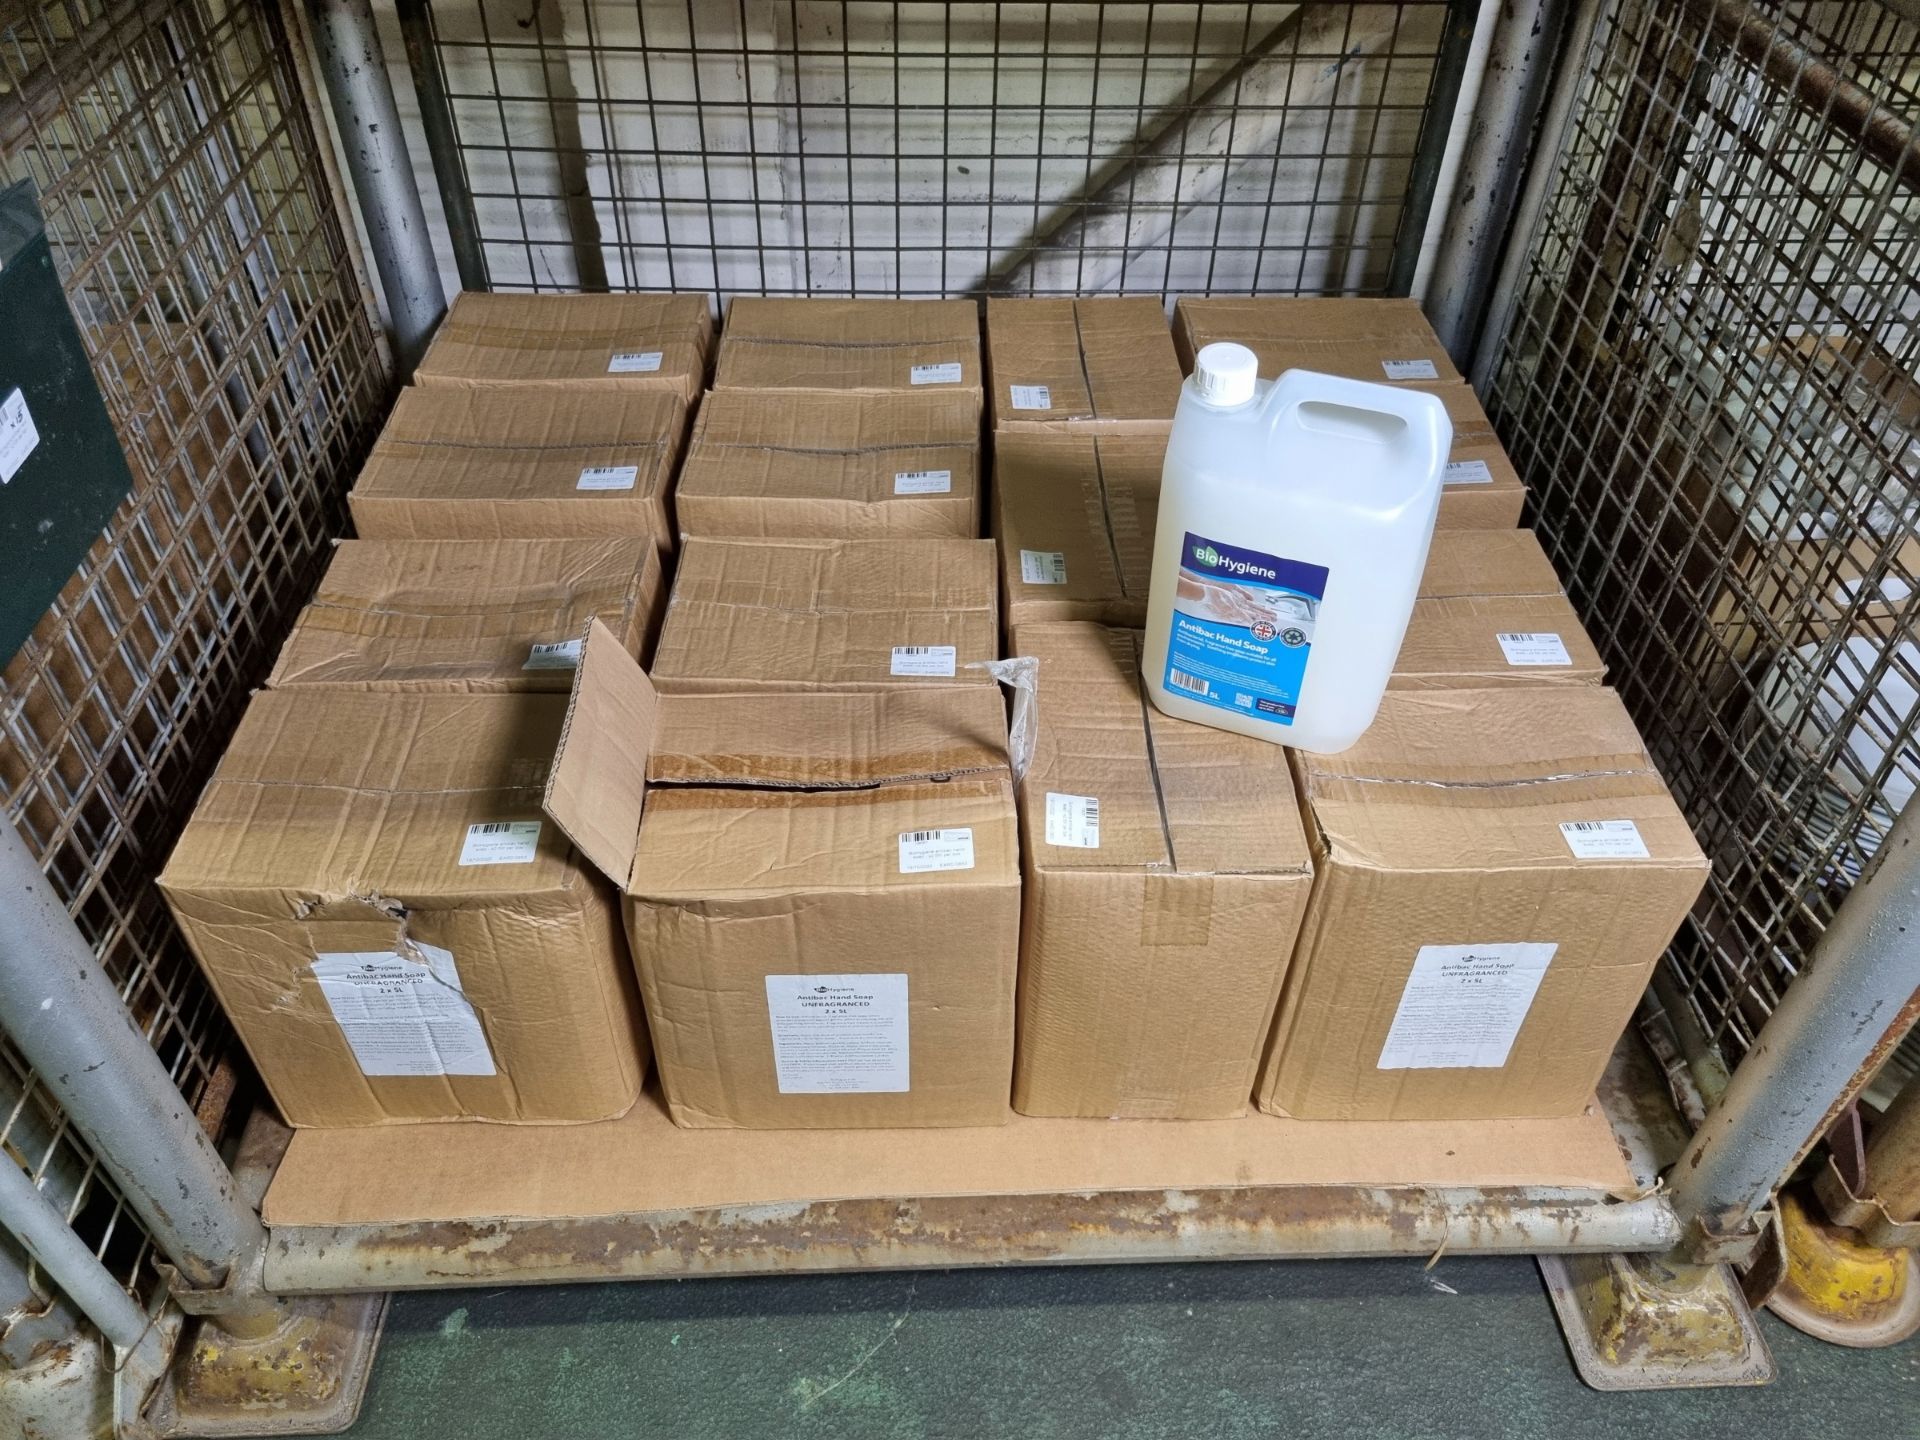 15x boxes of BioHygiene antibacterial hand soap - 5ltr bottles - 2 per box